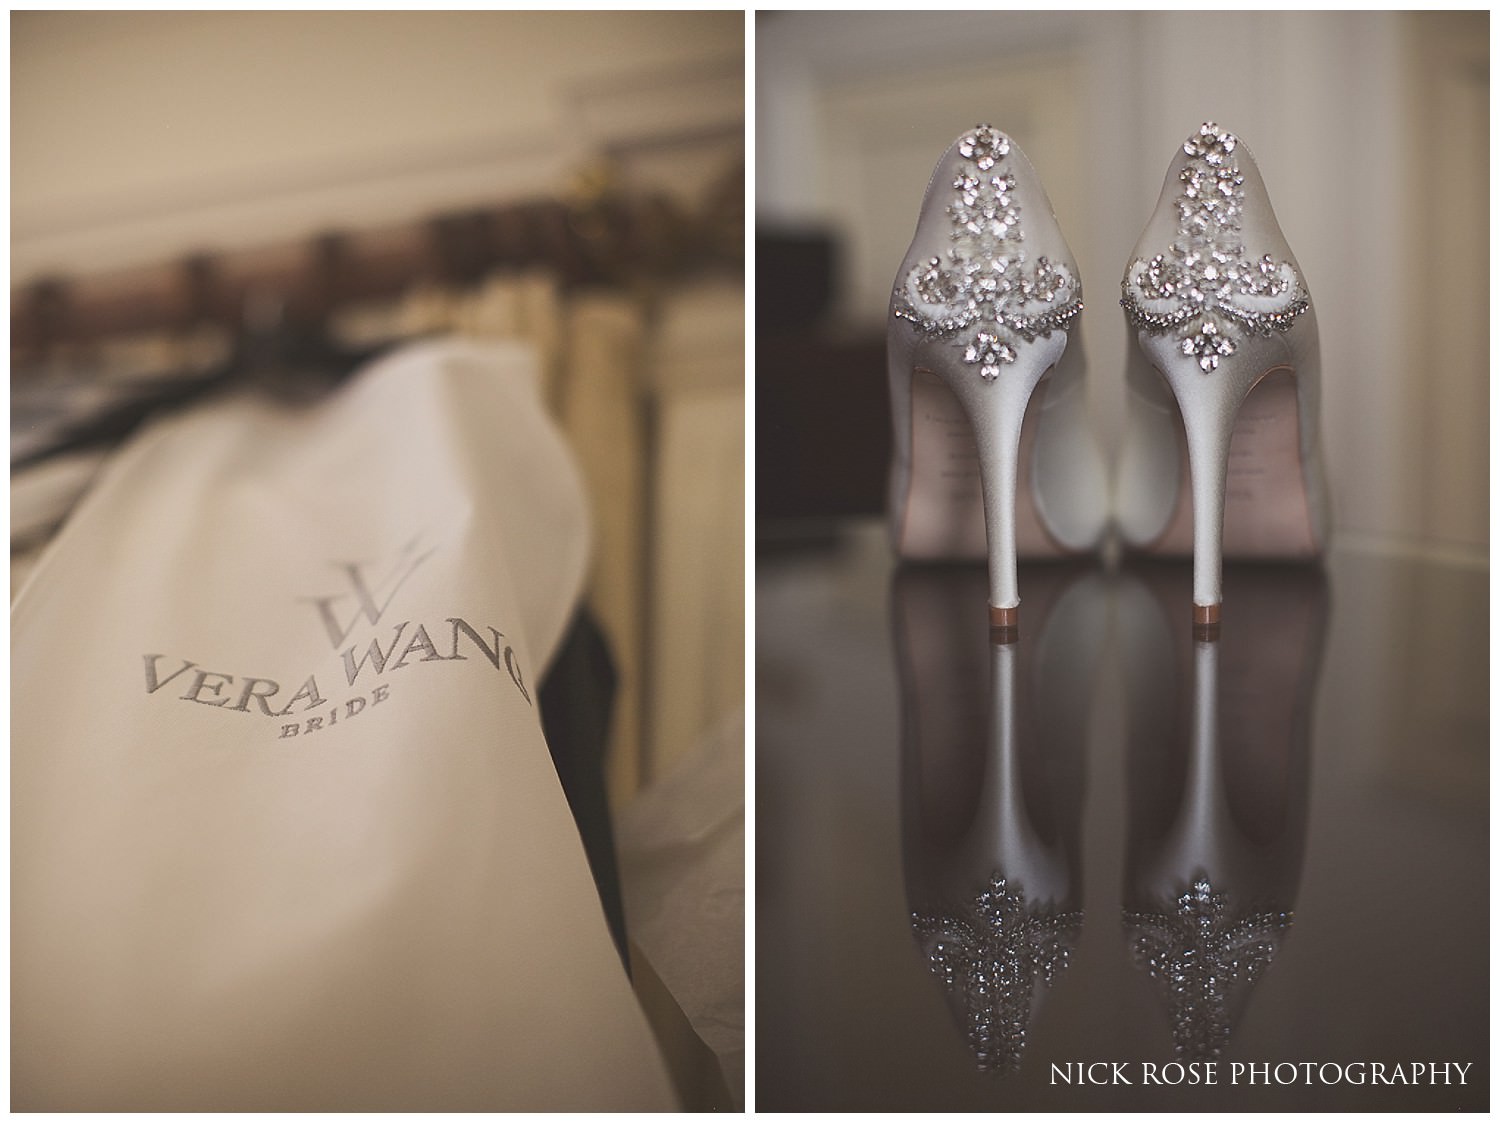  Vera Wang wedding dress and diamond encrusted shoes for a Danesfield House wedding in Buckinghamshire 